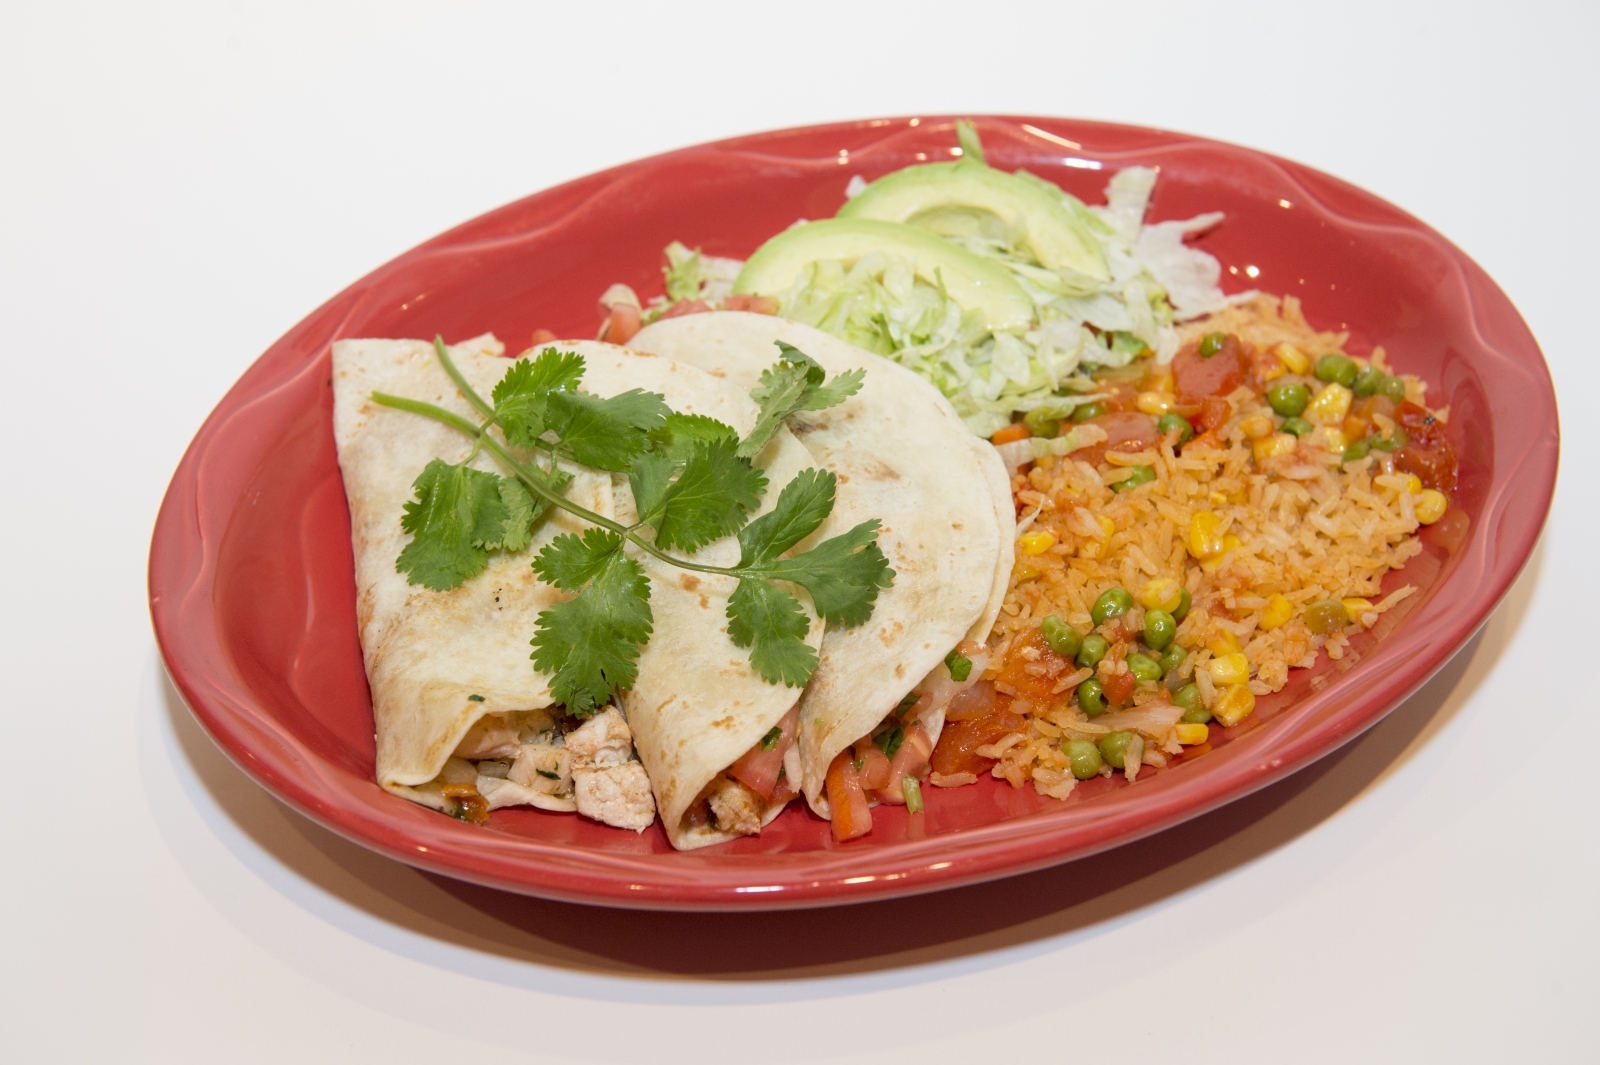 Columbus Restaurant and Food Photographer Senor Antonios - Chicken Tacos with Rice